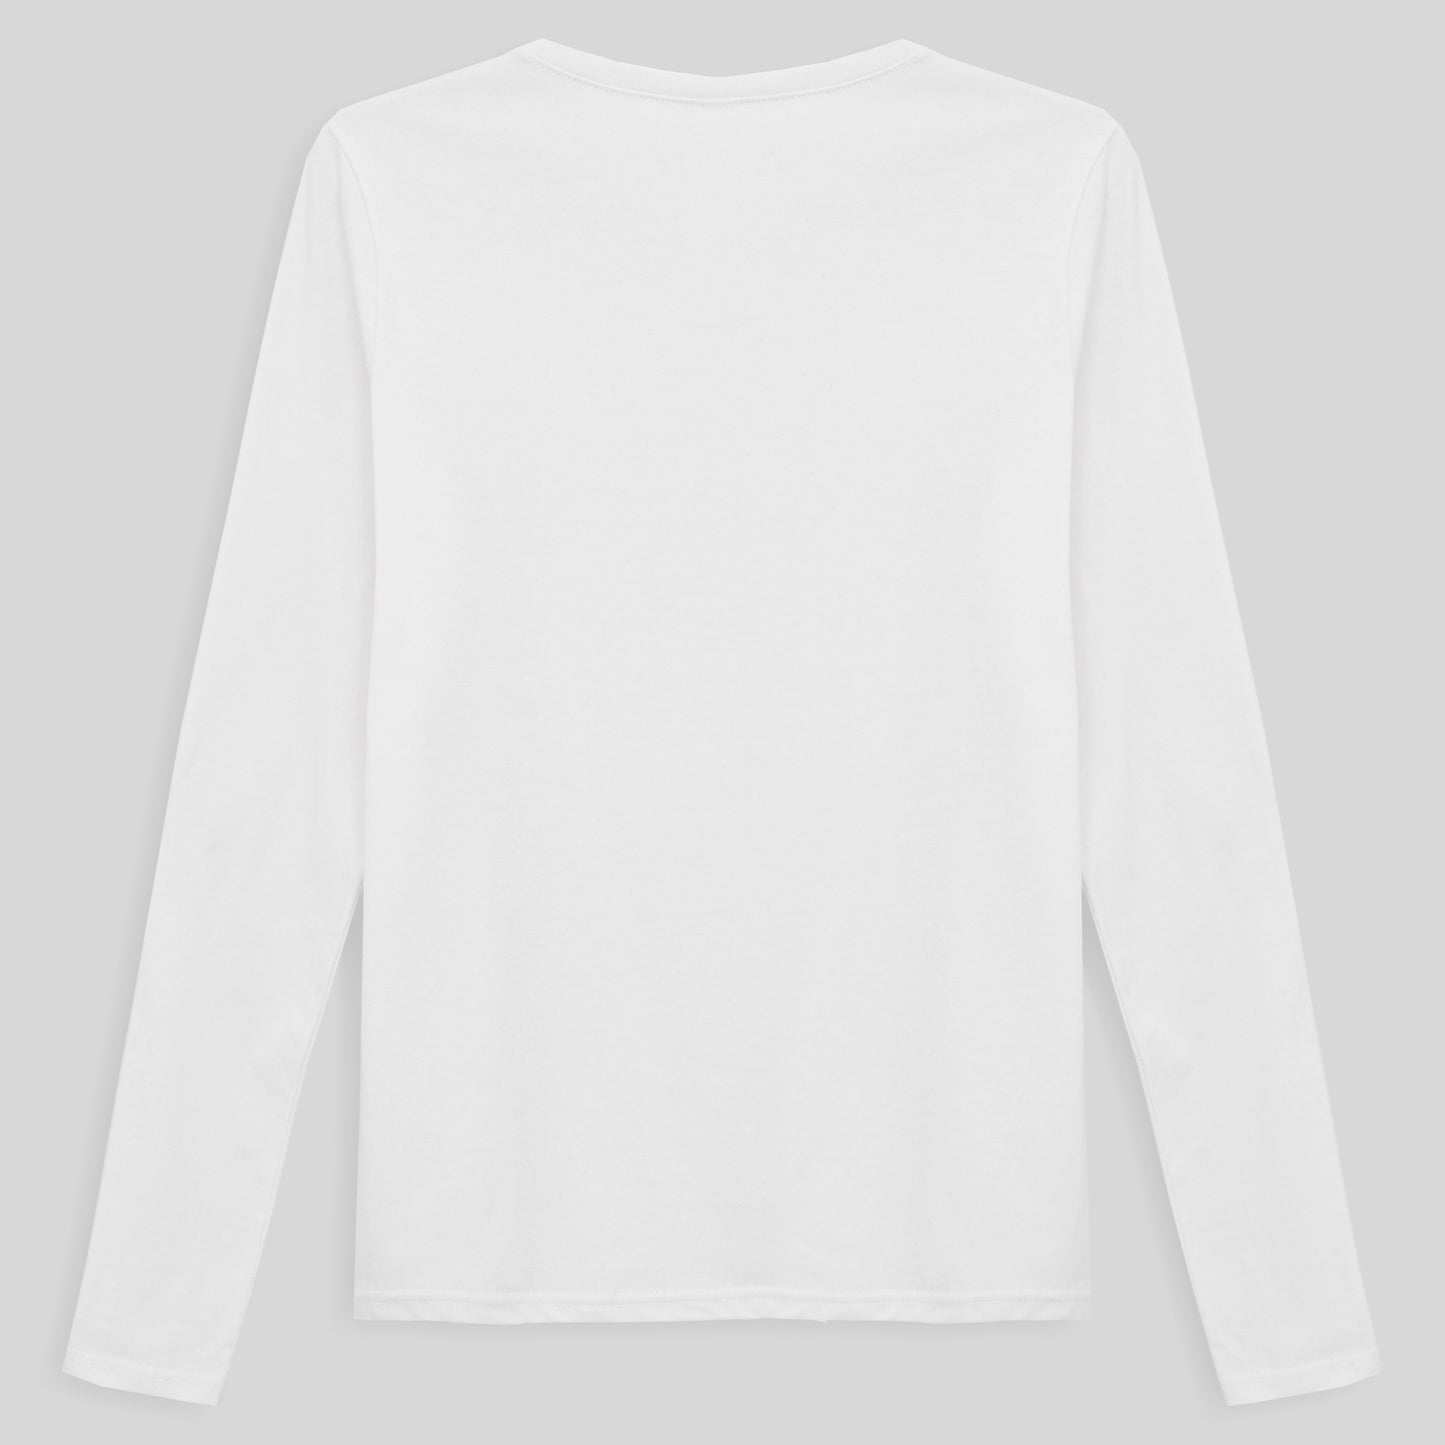 Camiseta Básica Manga Longa Feminina - Branco